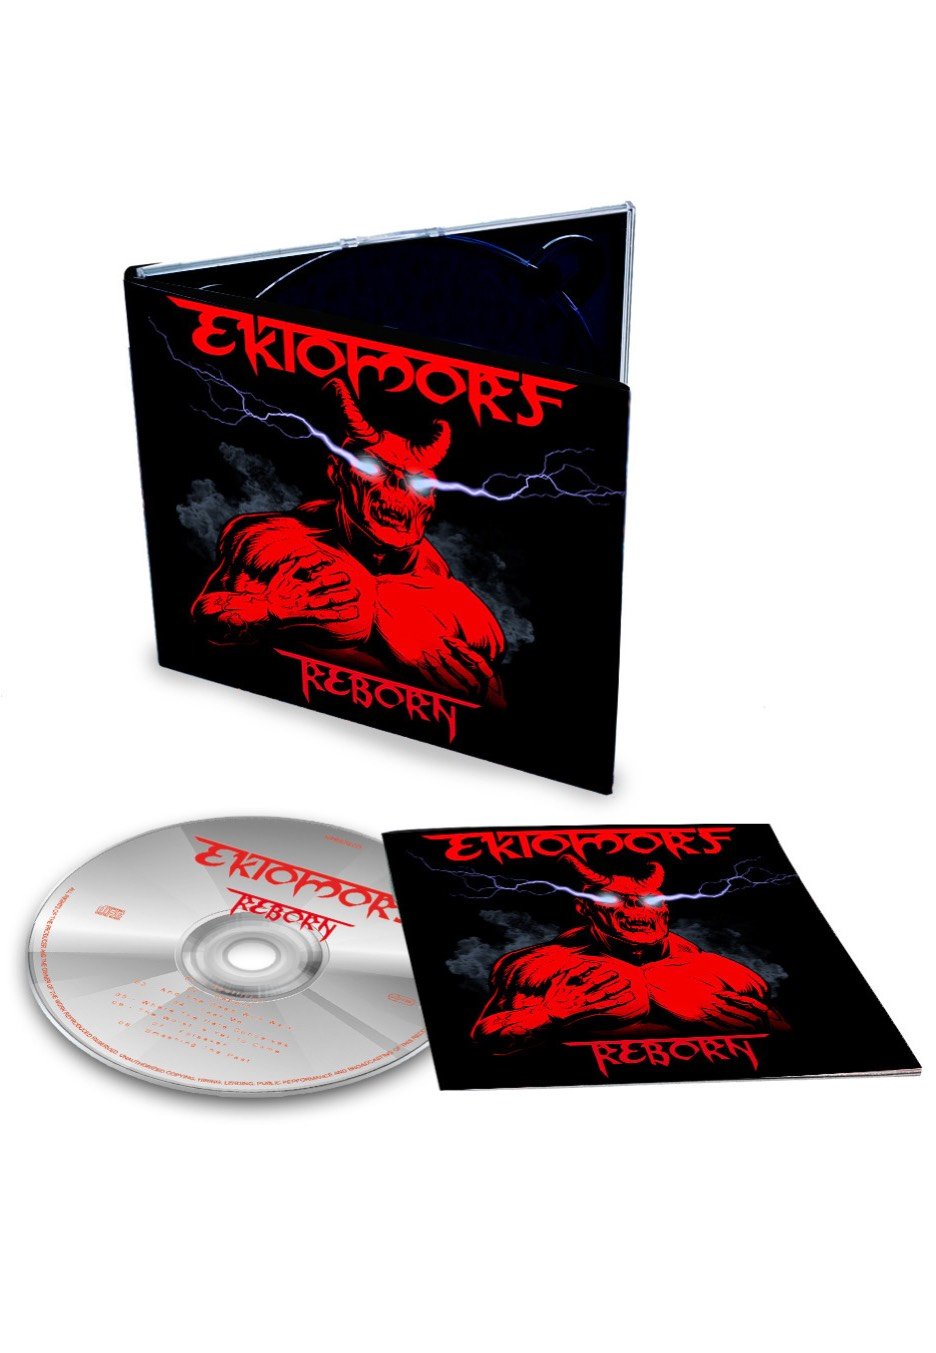 Ektomorf - Reborn - Digipak CD